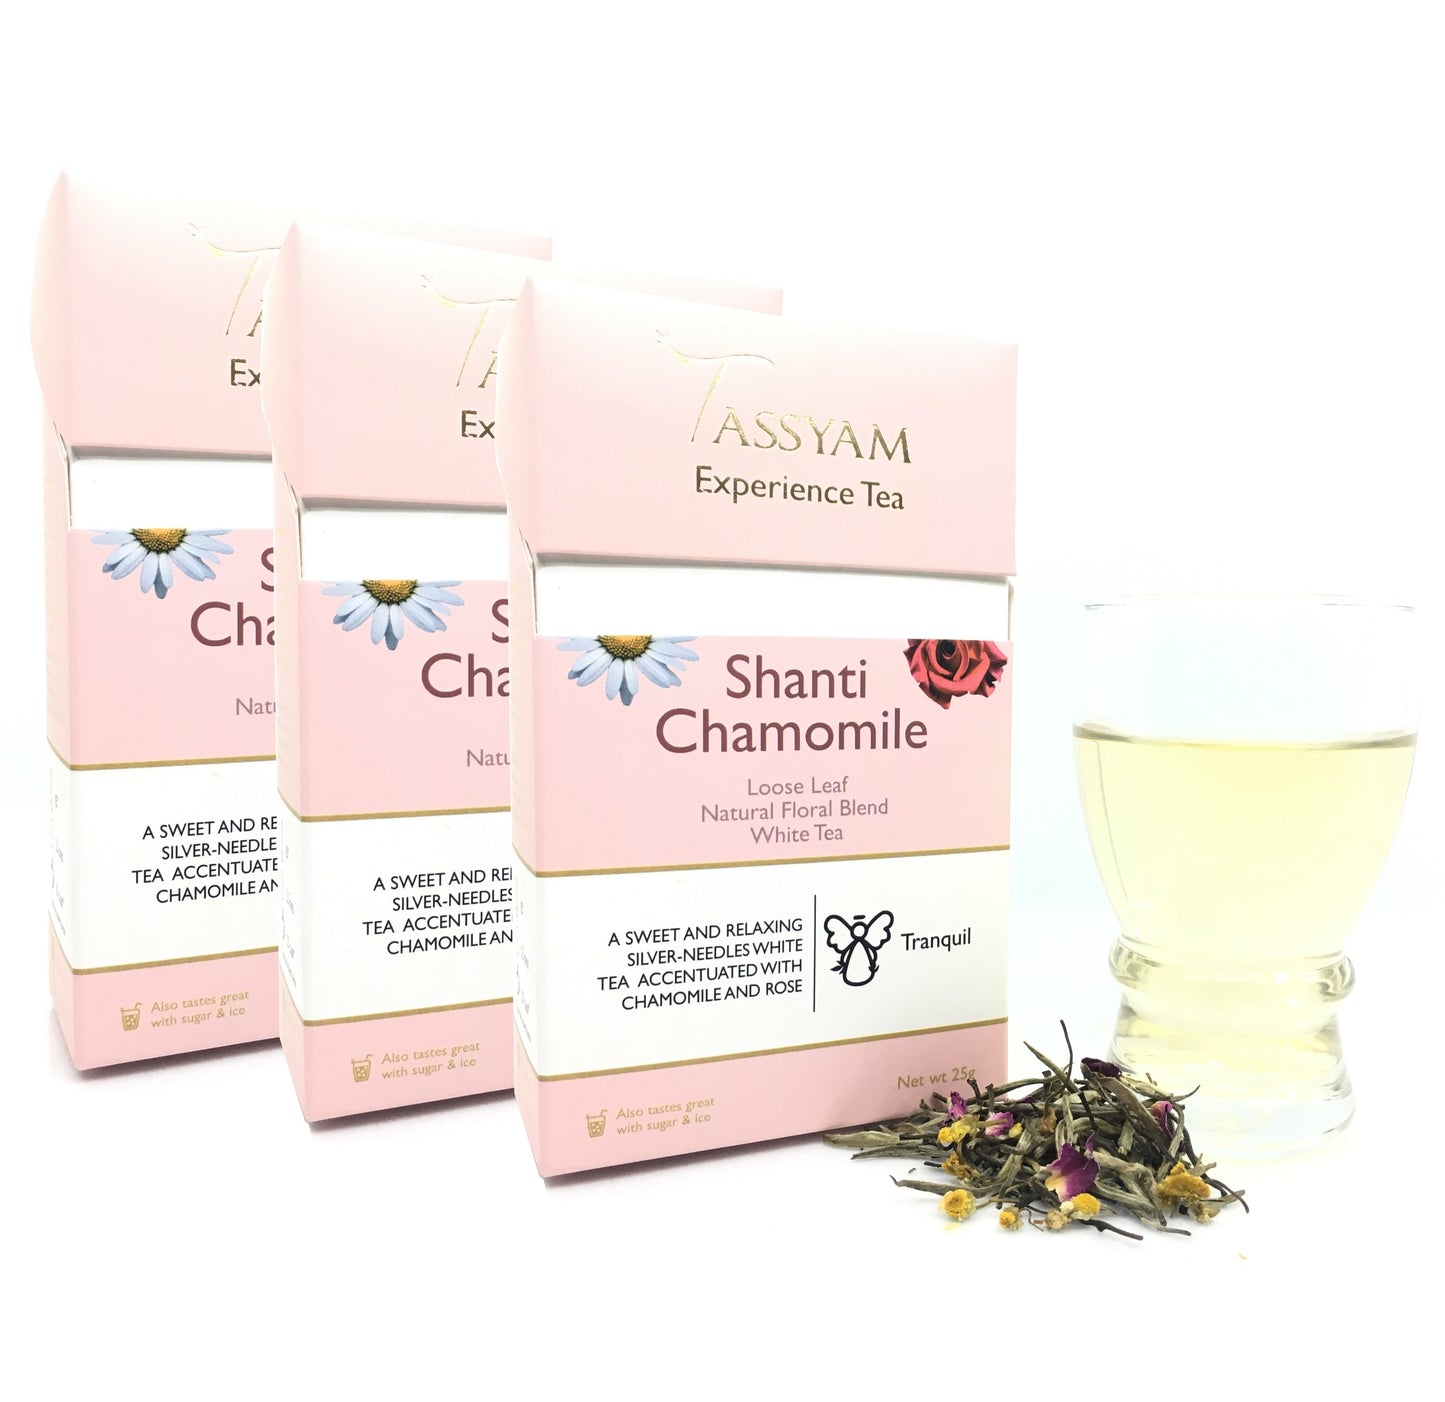 Shanti Chamomile tea - Tassyam Organics